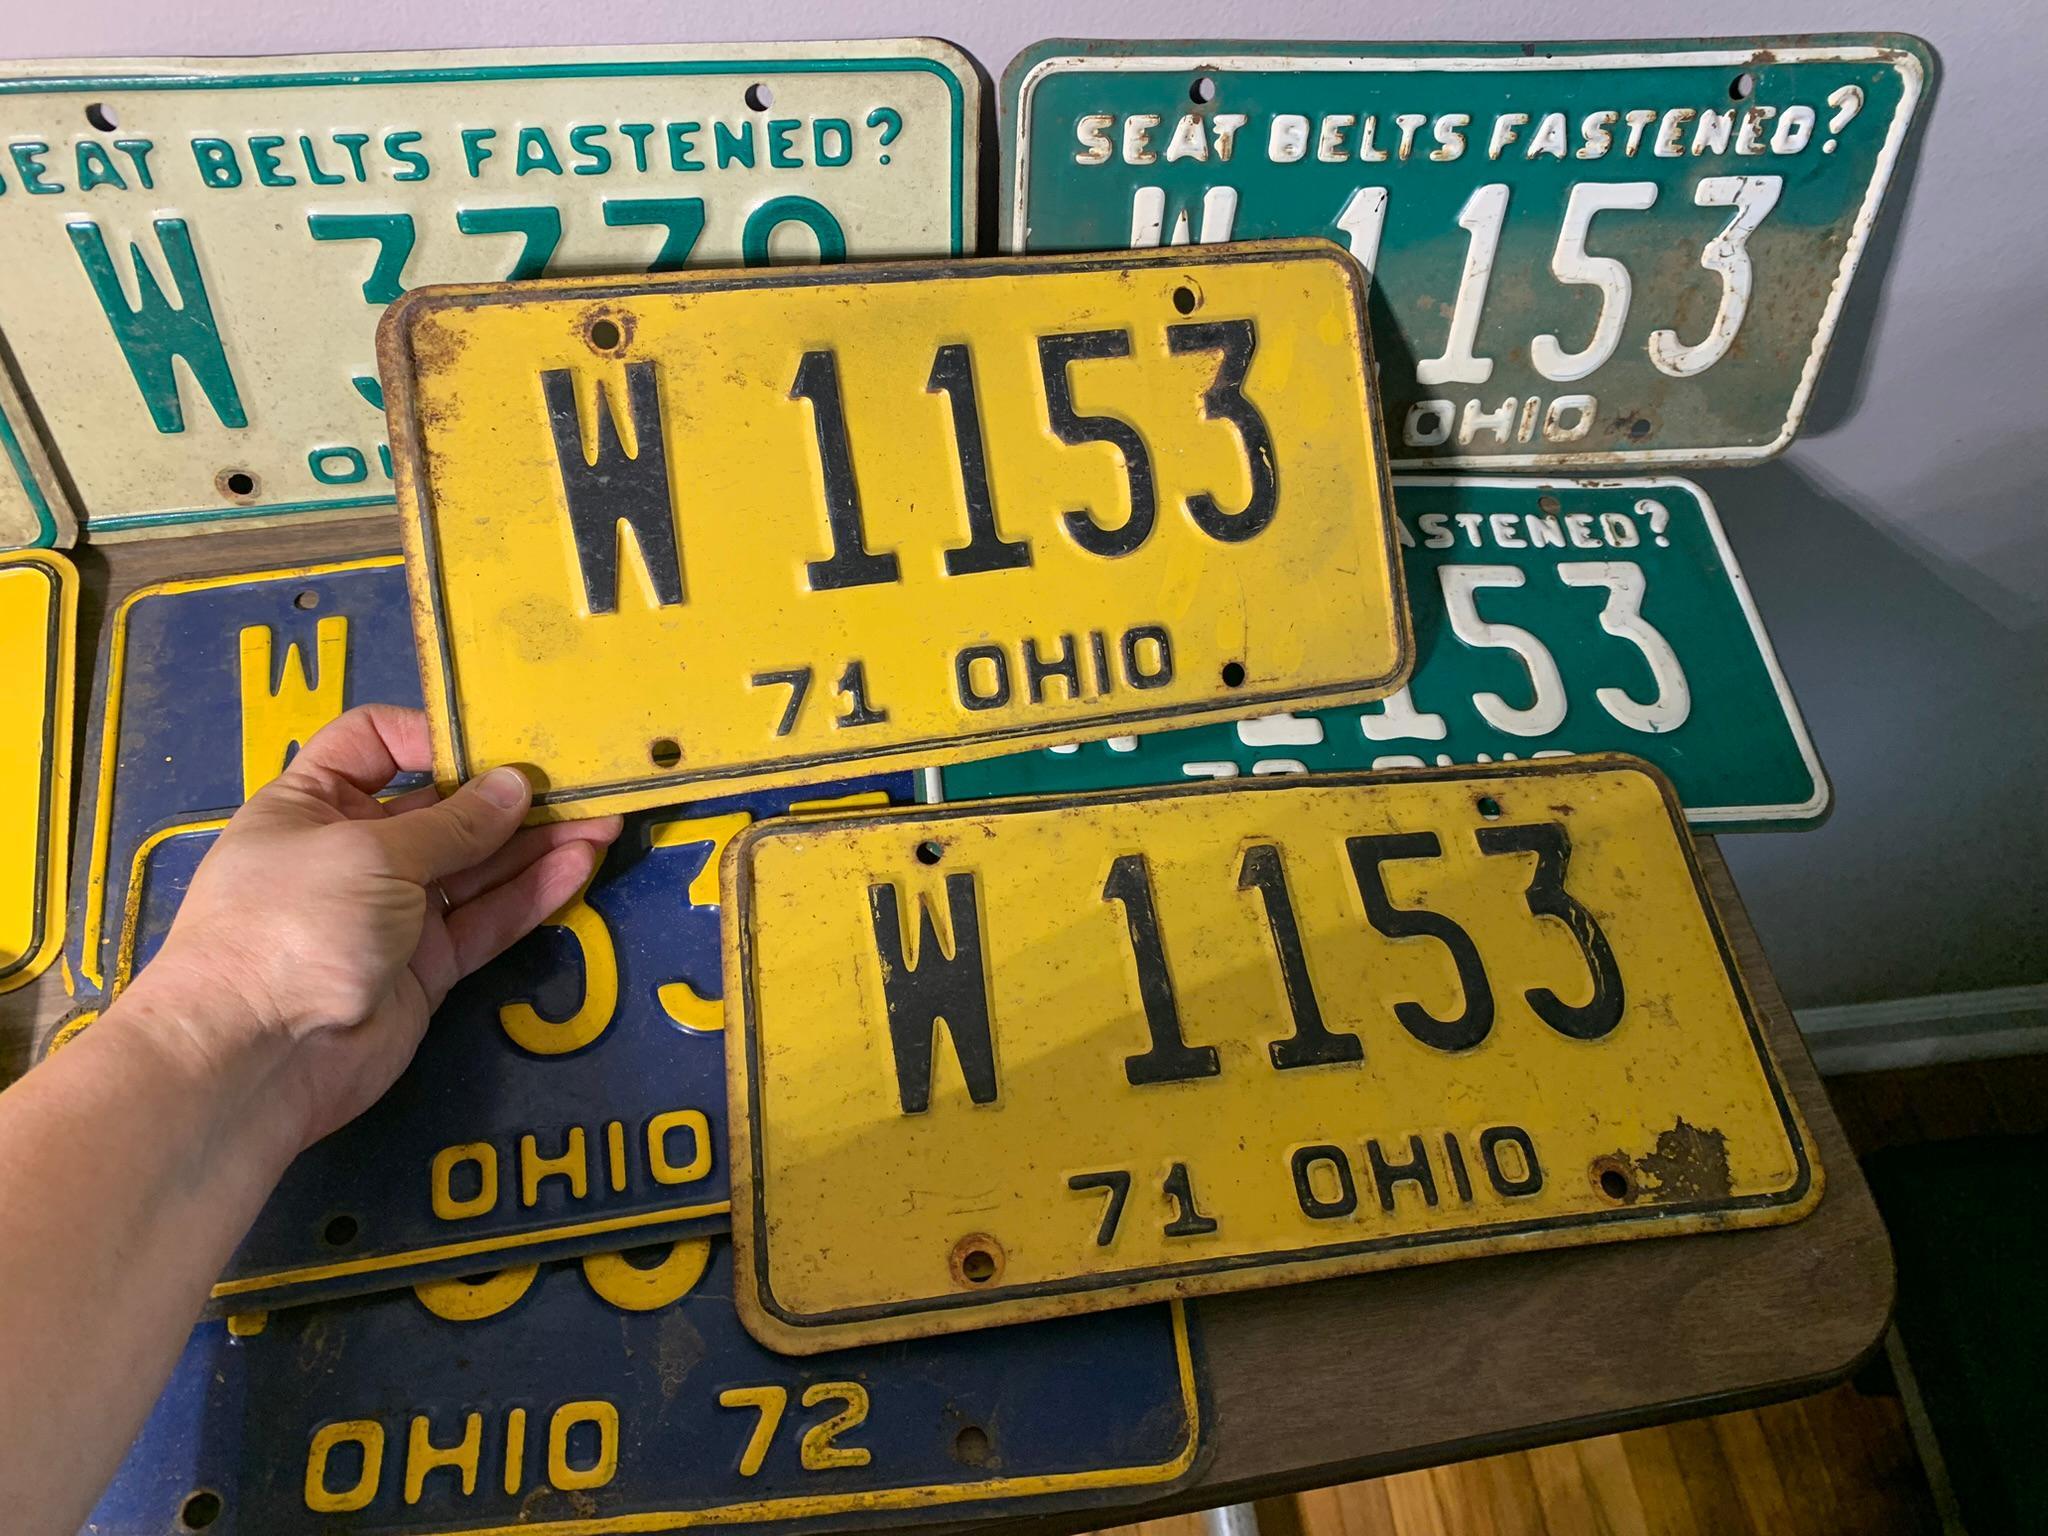 Vintage License Plates, Equine Photos, & Farm Related Ephemera